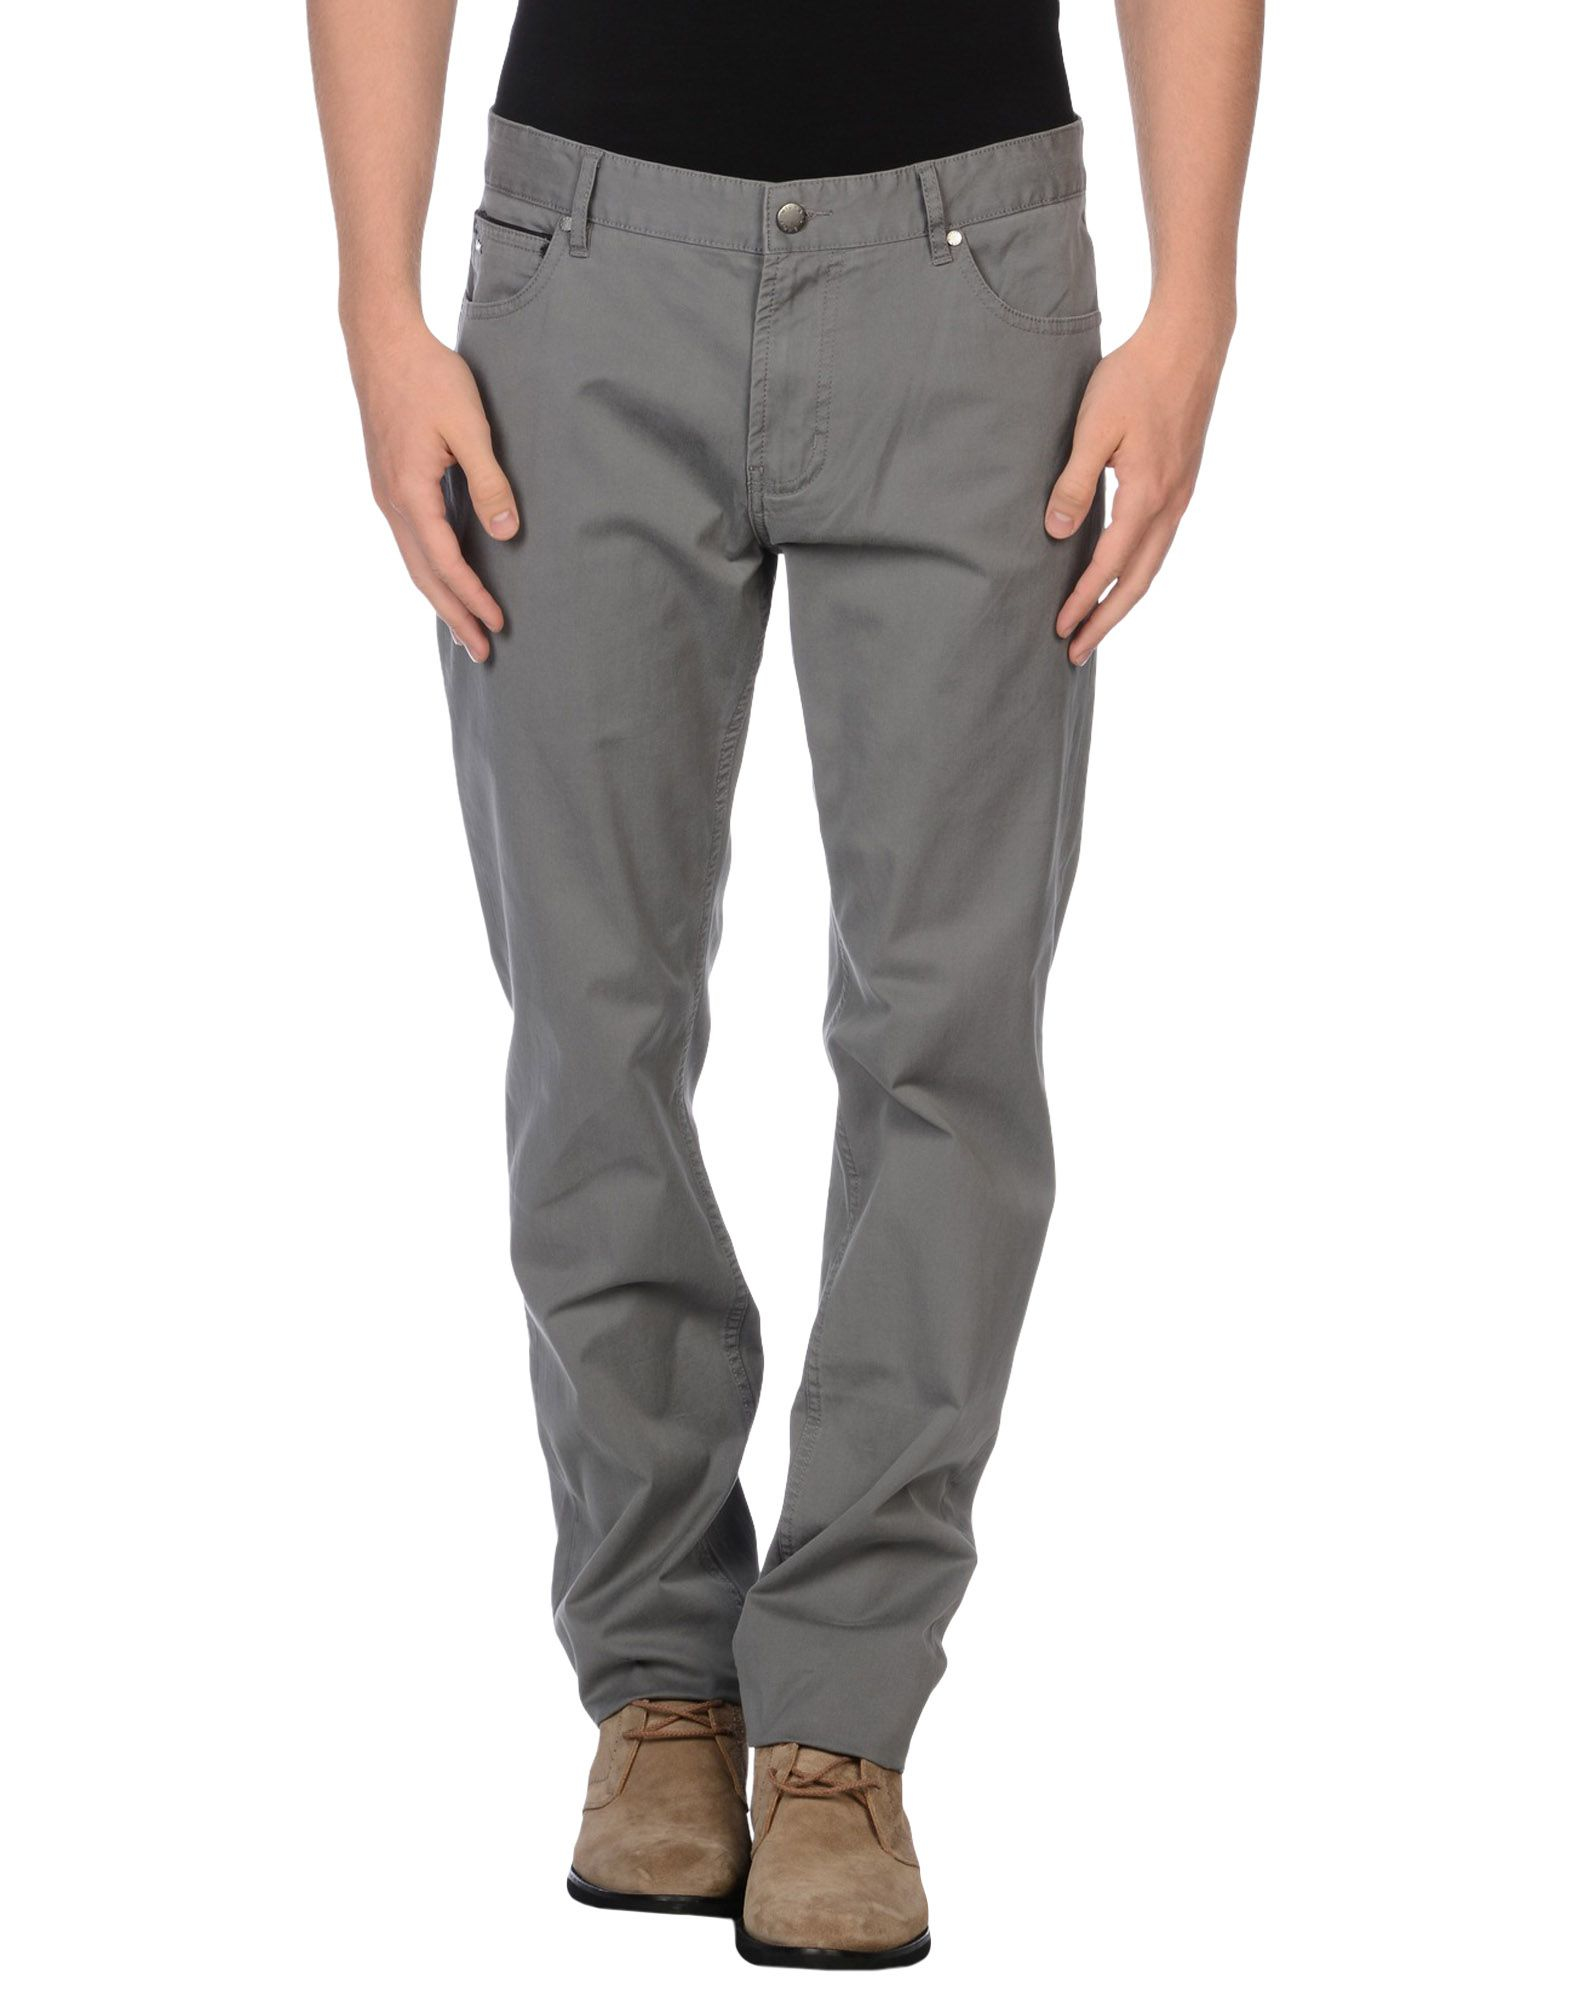 Lyst - Michael Kors Casual Trouser in Gray for Men